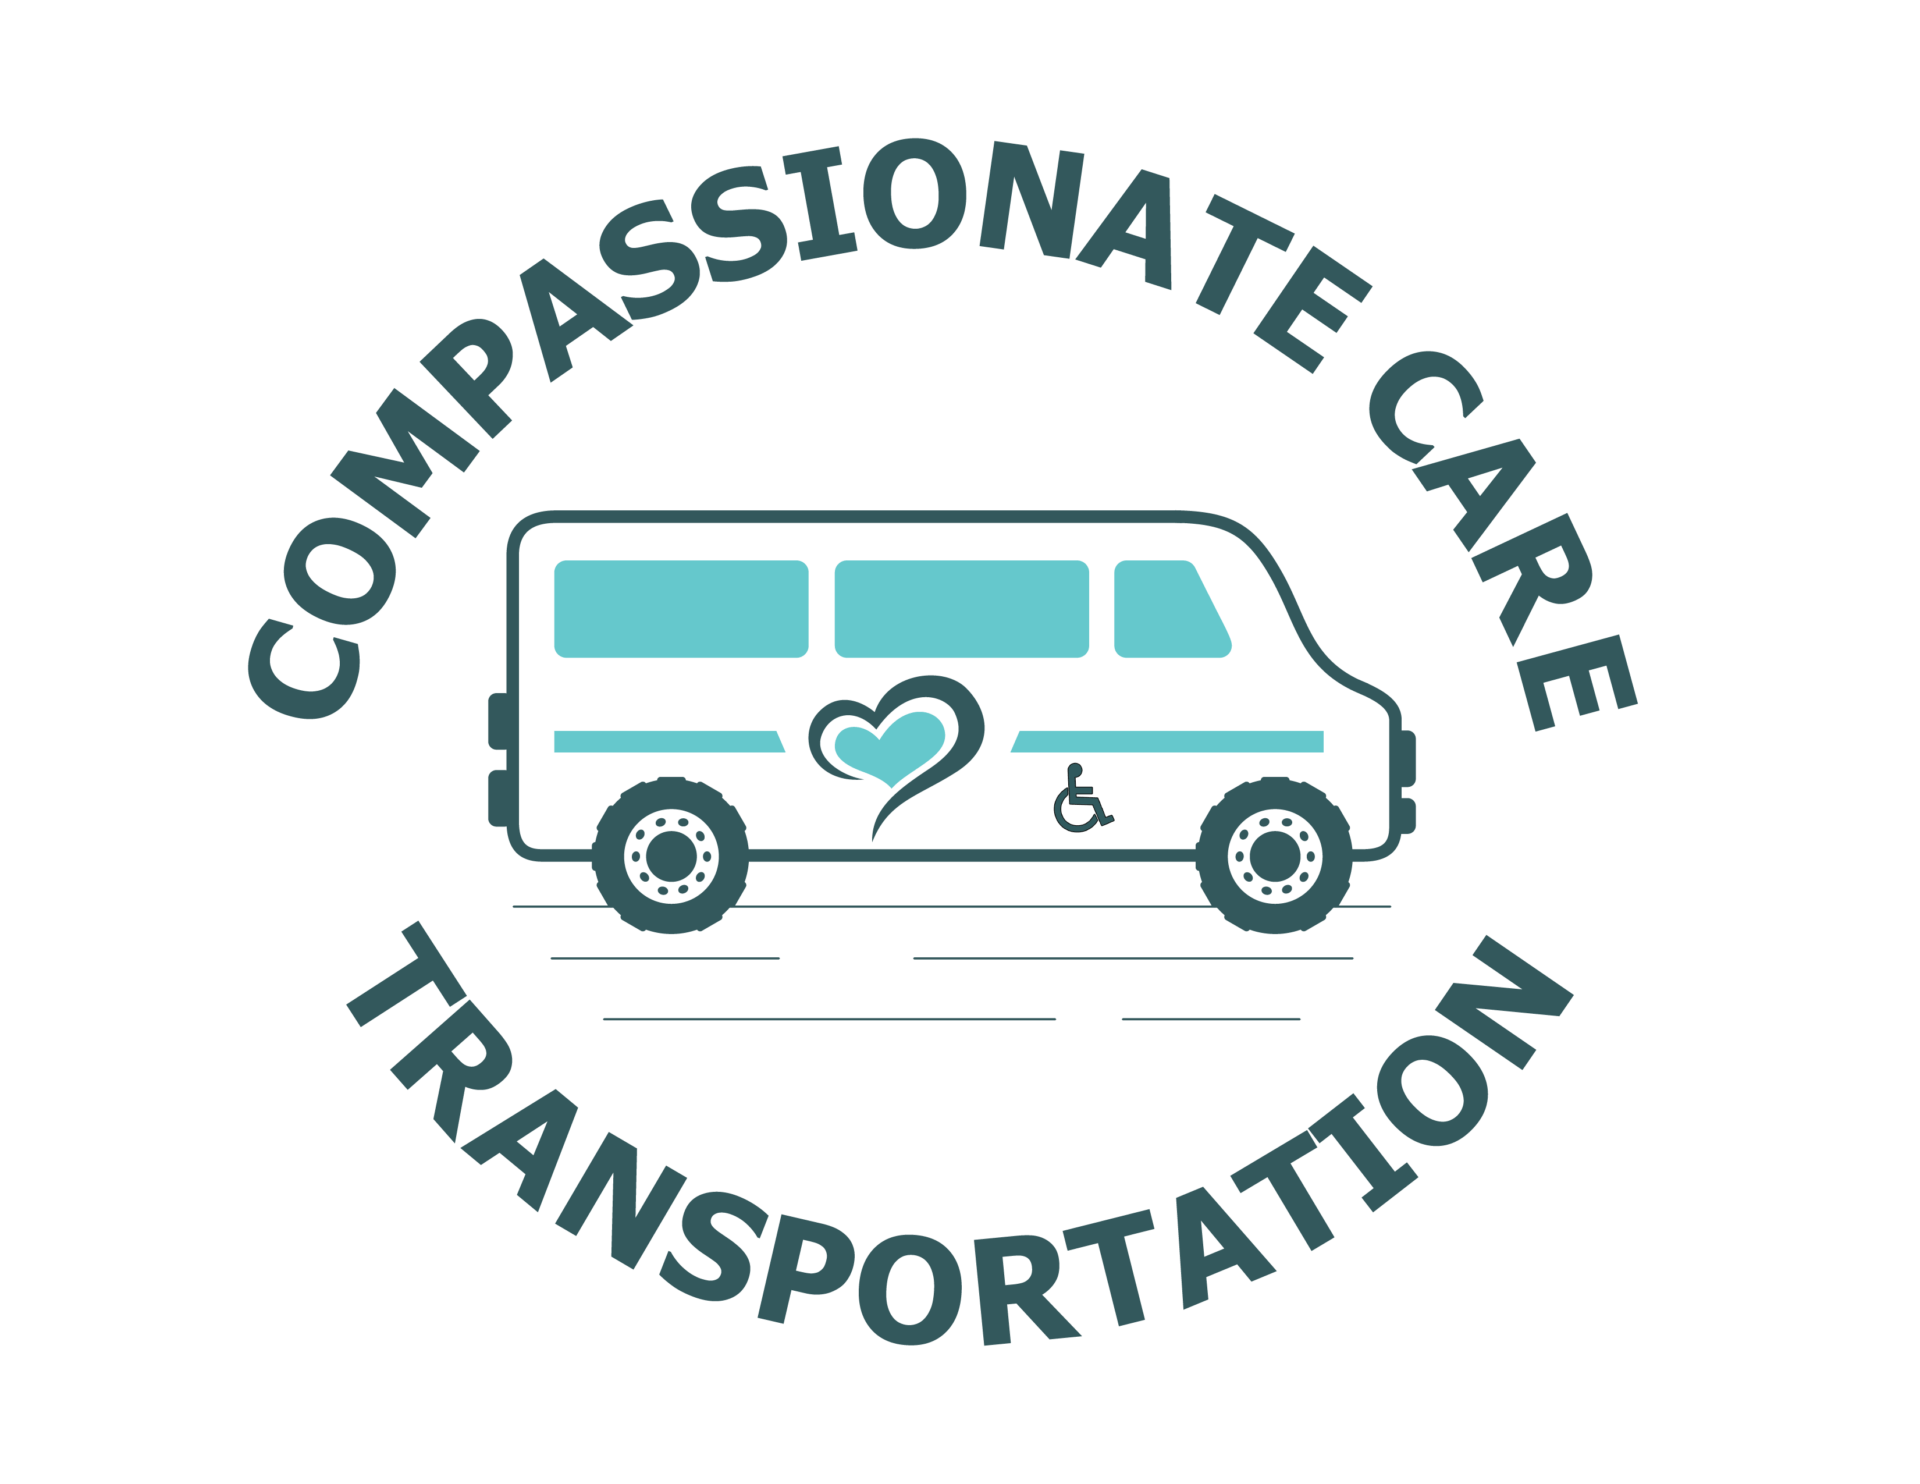 Compassionate care transportation logo.